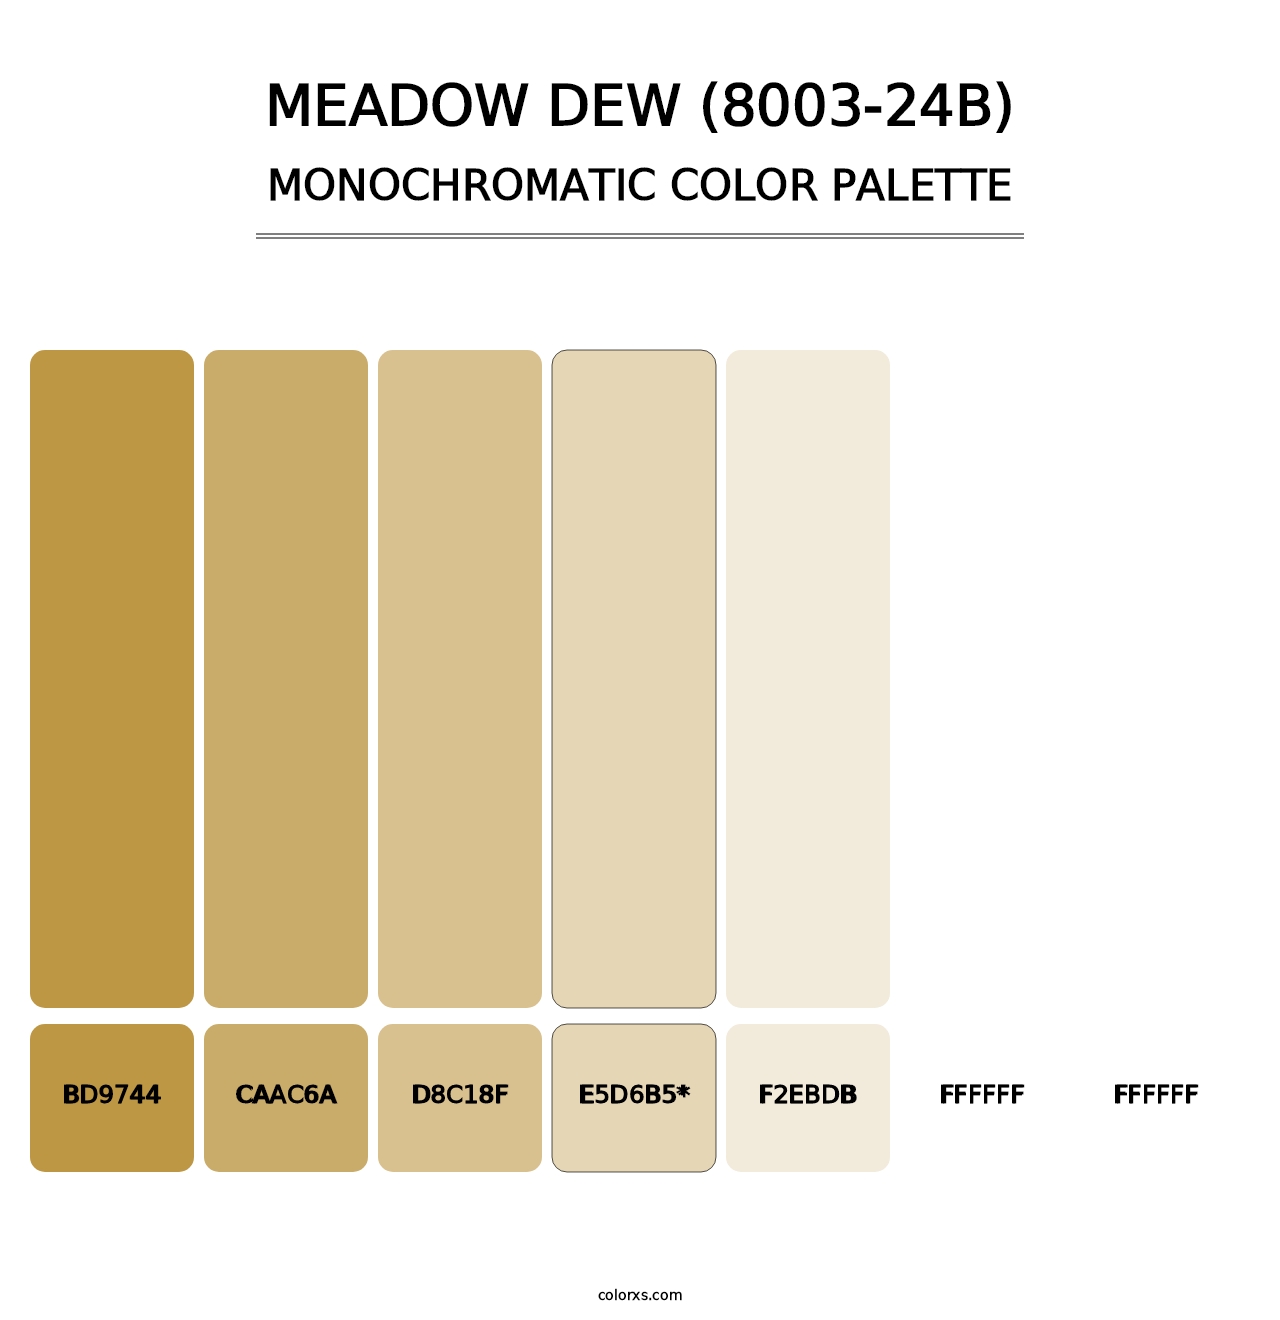 Meadow Dew (8003-24B) - Monochromatic Color Palette